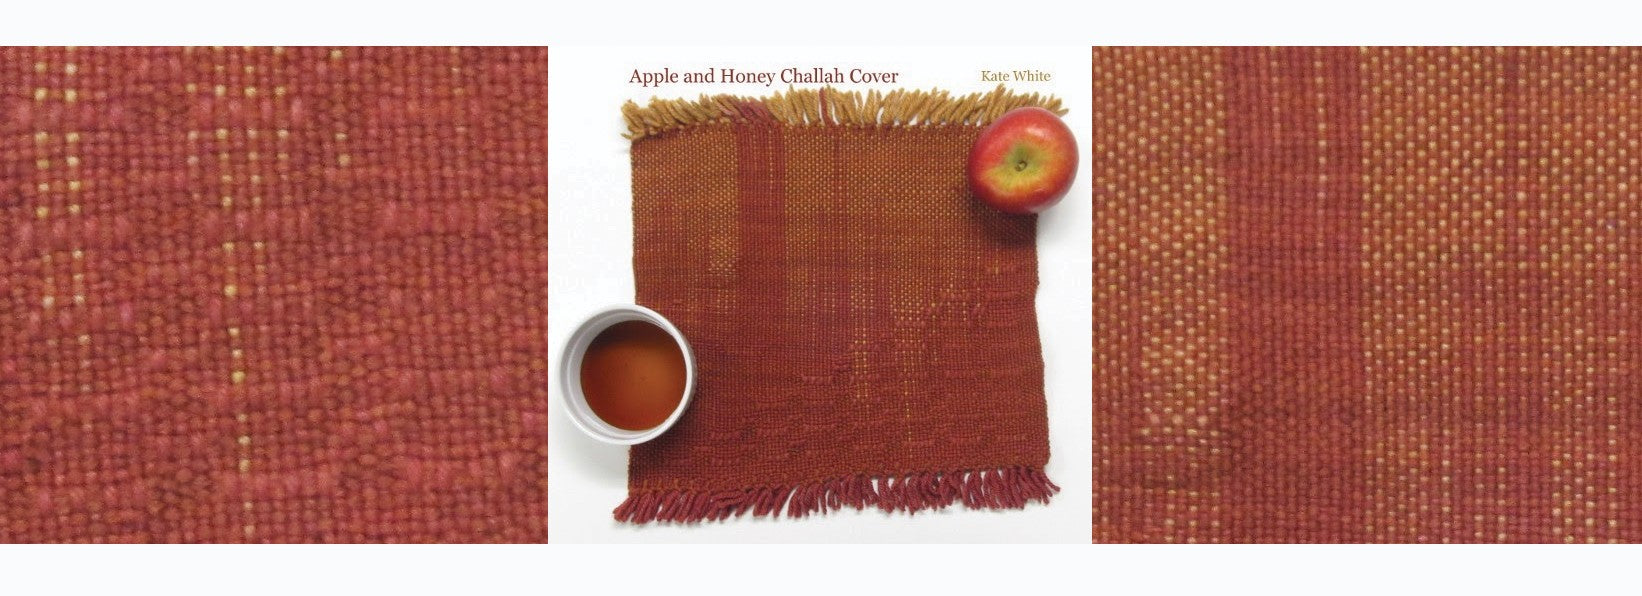 Apple & Honey Challah Cover